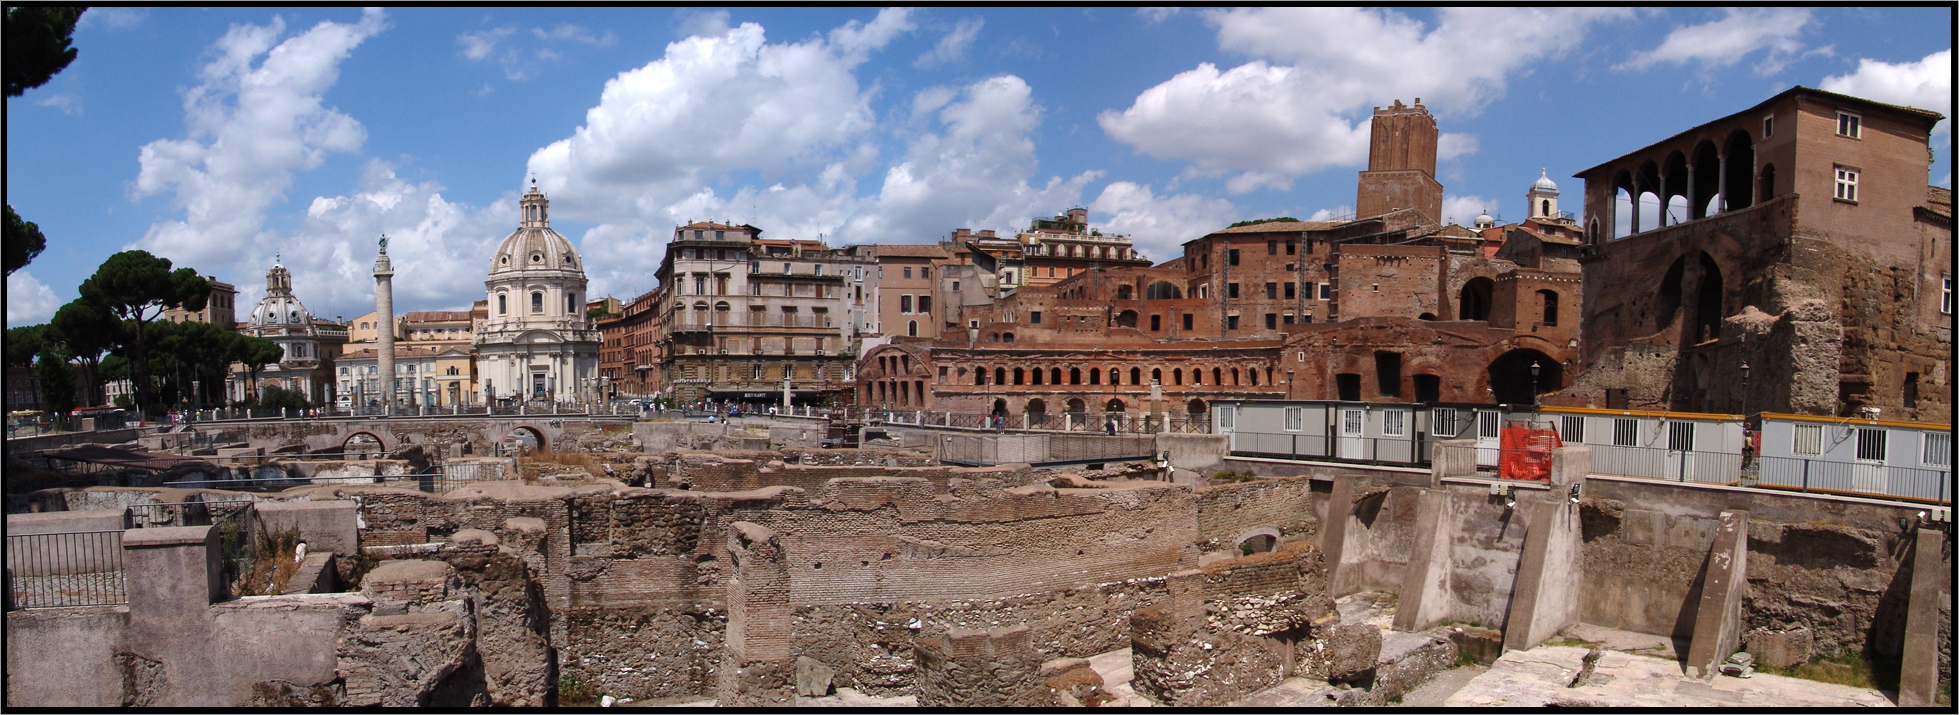 Le Forum de Trajan, Rome, Italie, Août 2006